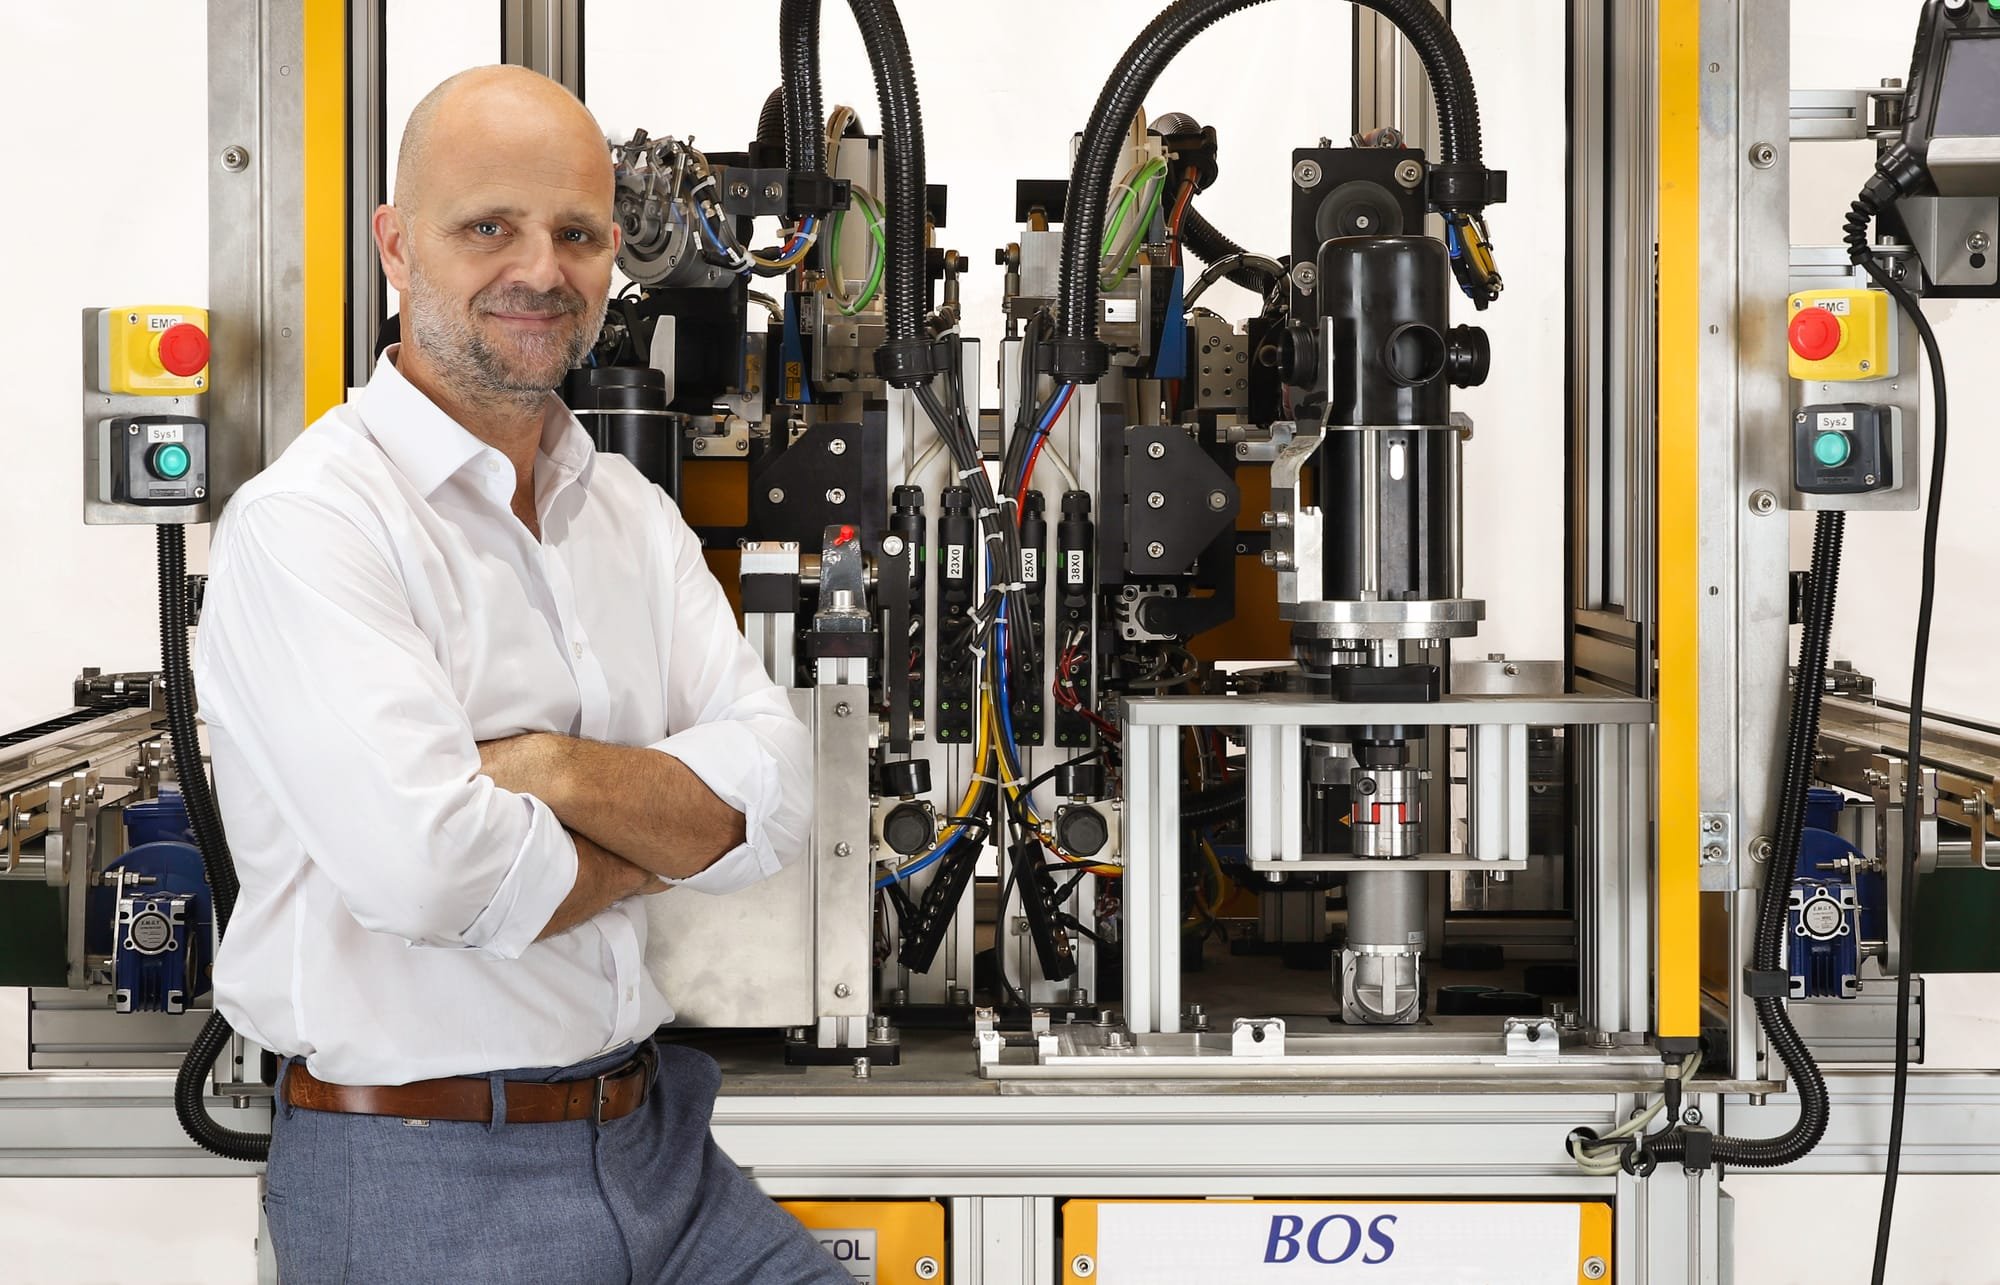 Bos Robotics, המתמחה בפיתוח וייצור מכונות וקווי אוטומציה בהתאמה אישית, מונתה כנציגת ZANCANER, המתמחה במערכות אוטומציה ייעודיות ליצרני גלילים